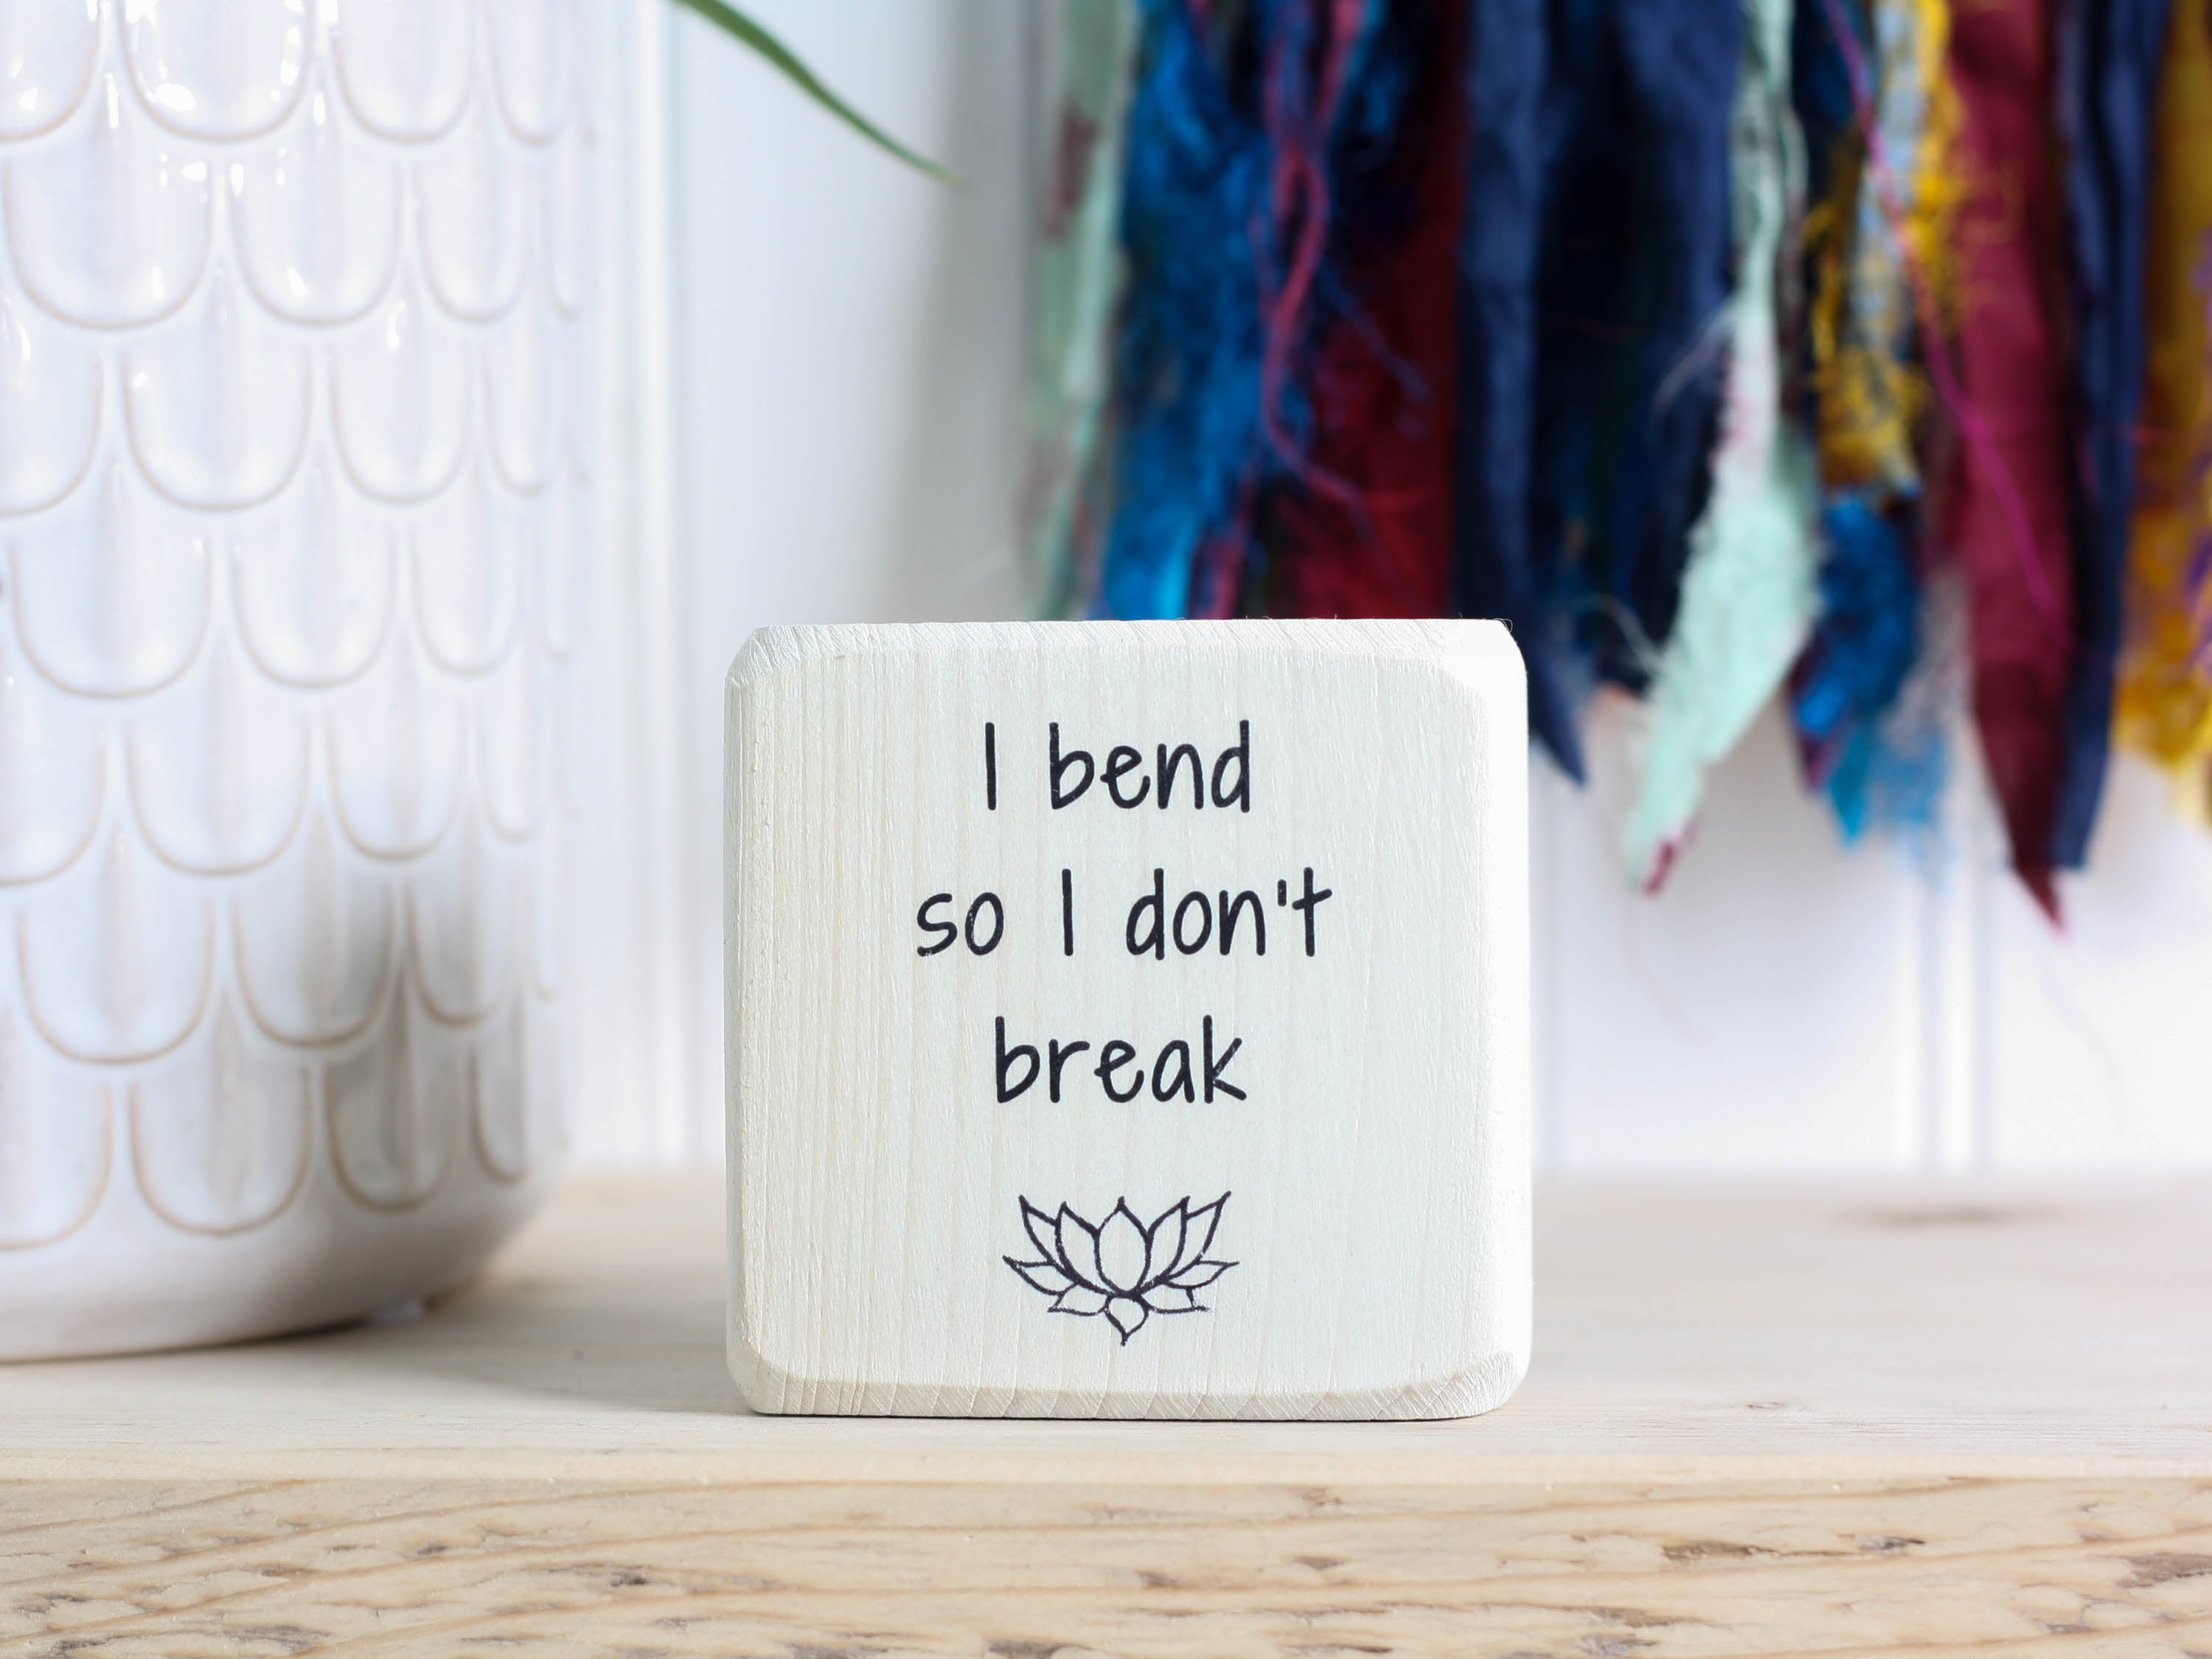 Mini wood yoga decor in whitewash with the saying "I bend so I don't break".